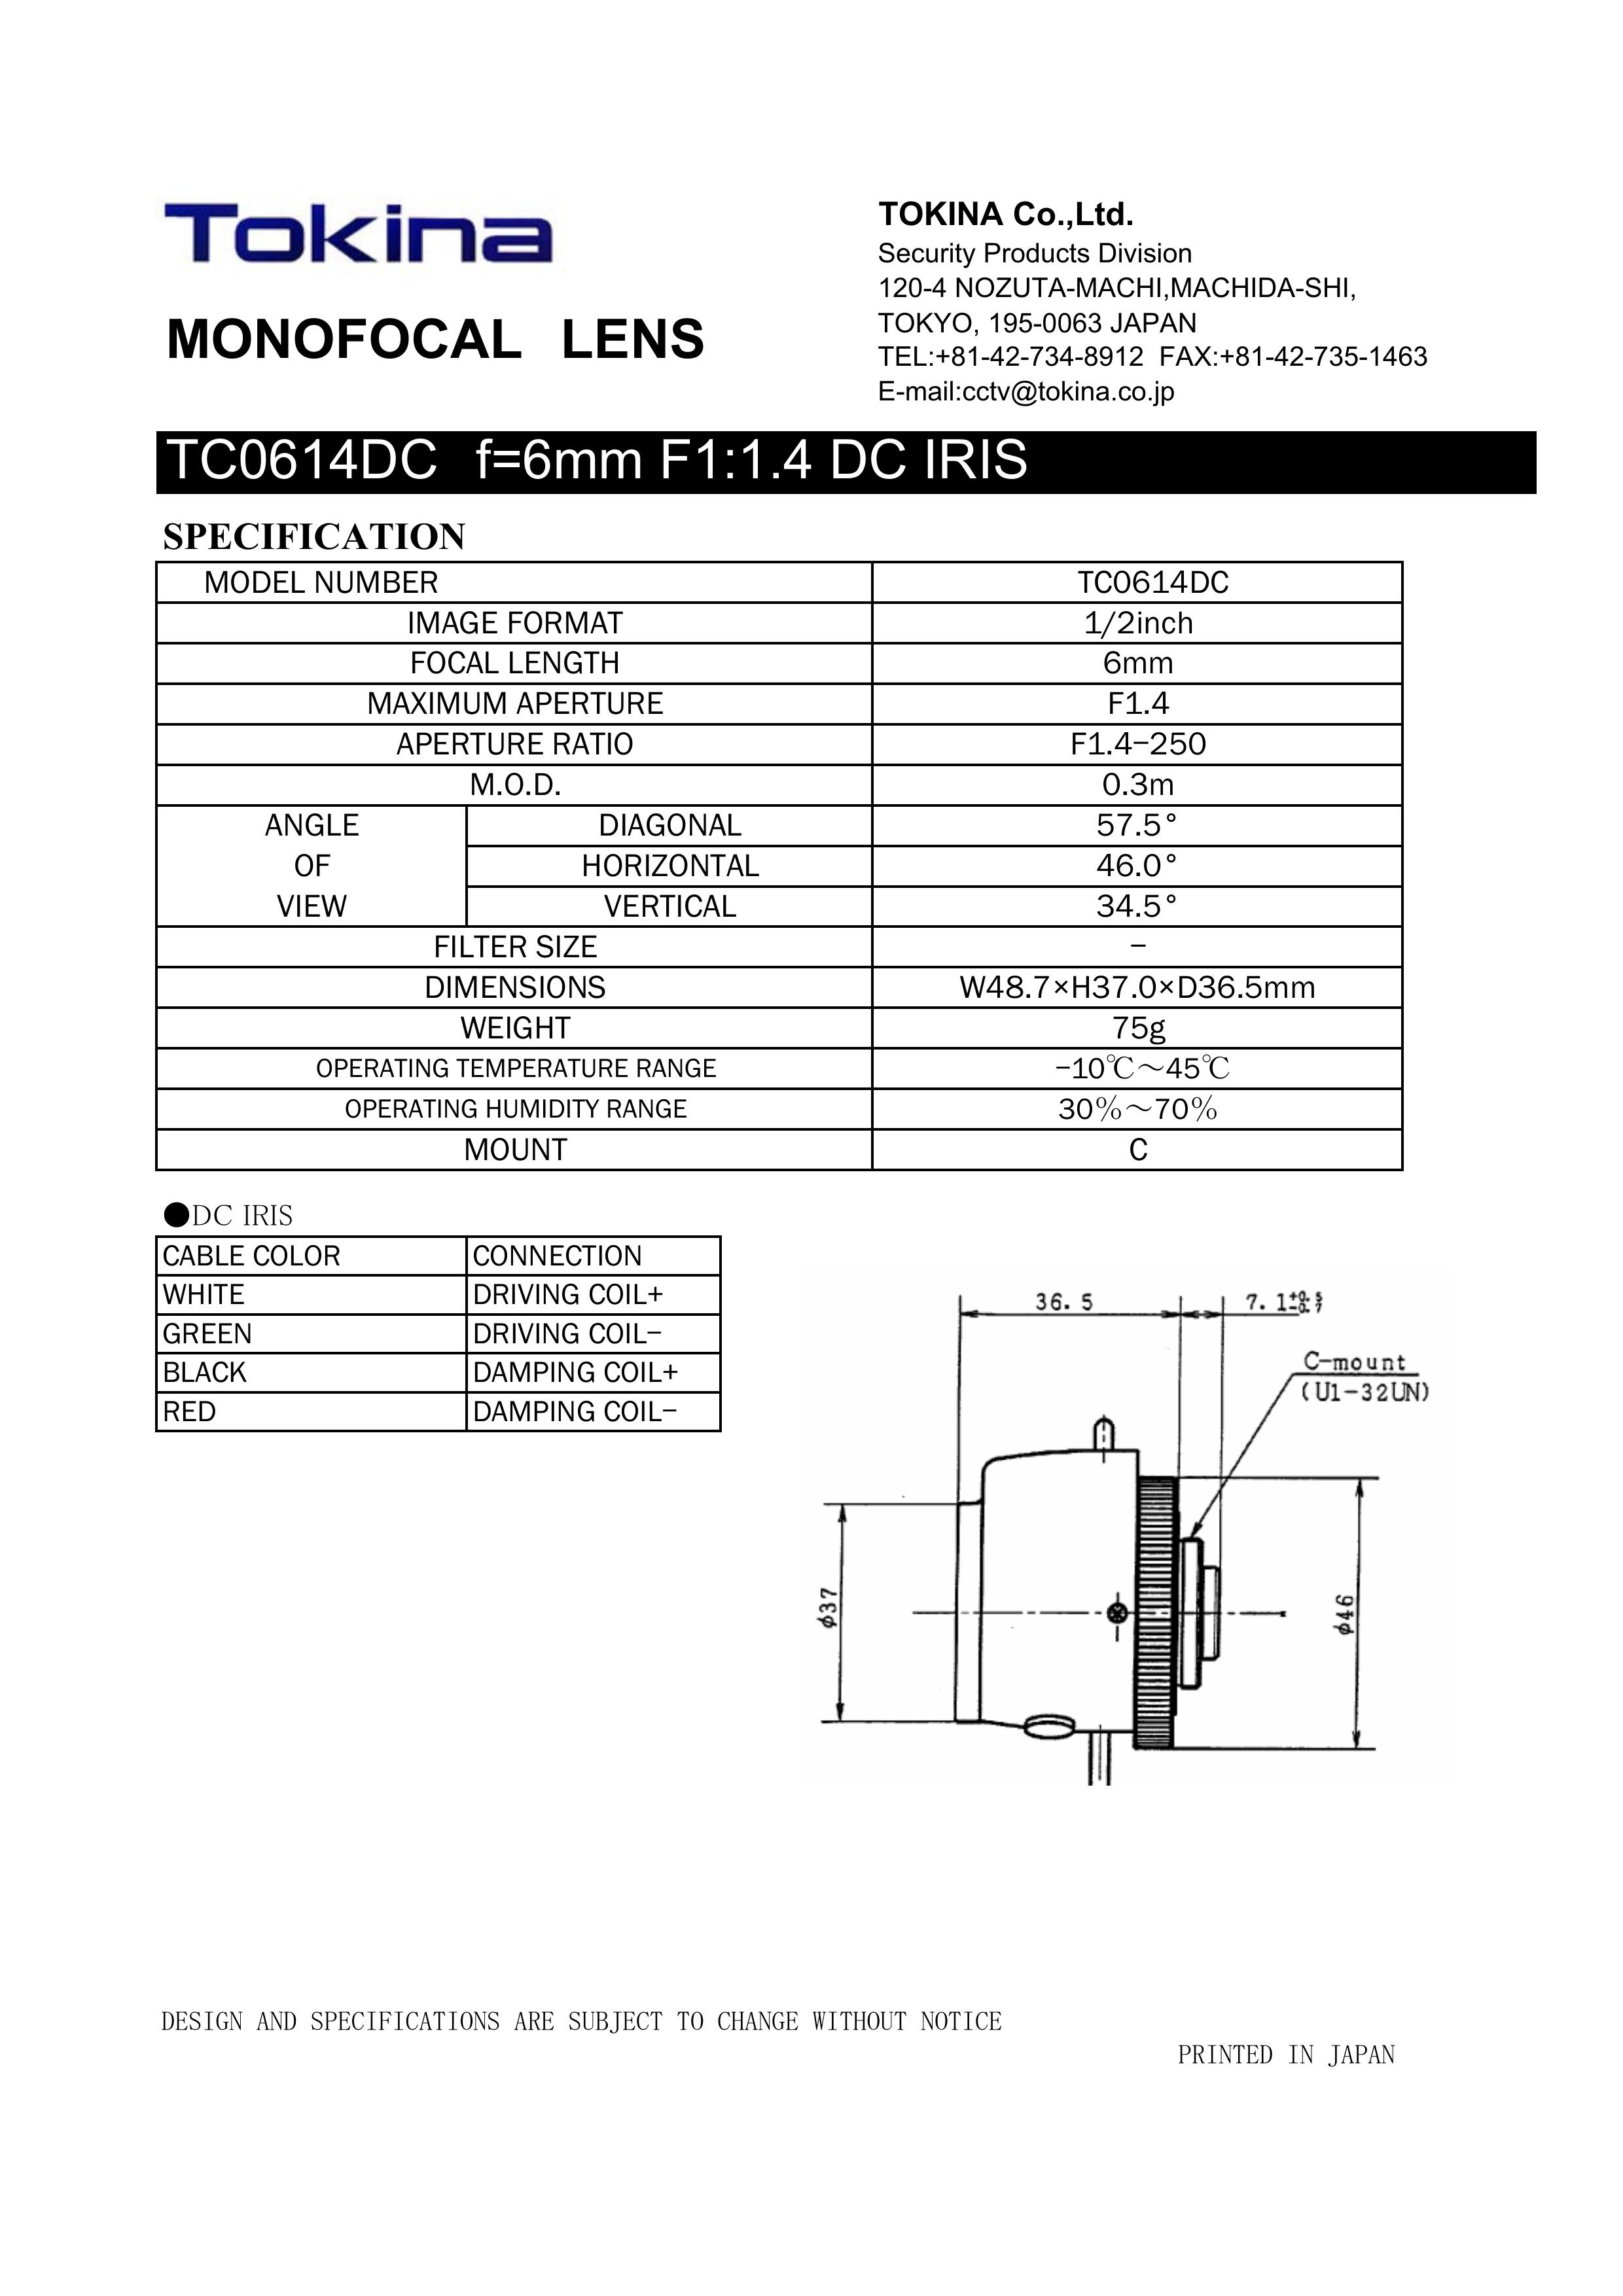 Tokina TC0614DC Camera Accessories User Manual